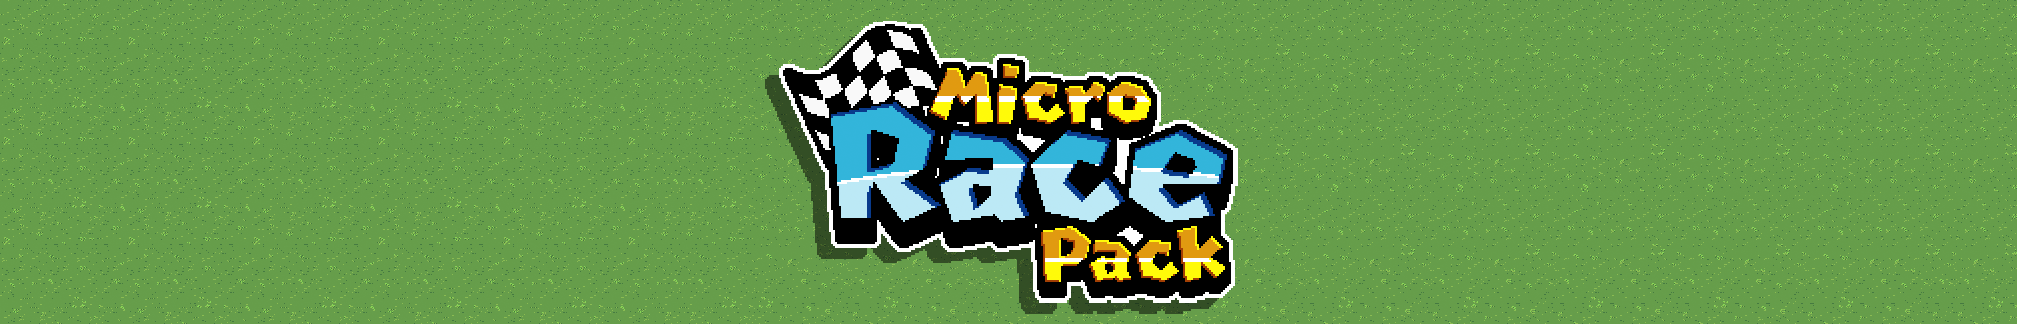 Micro Racing Track Pack Isometric